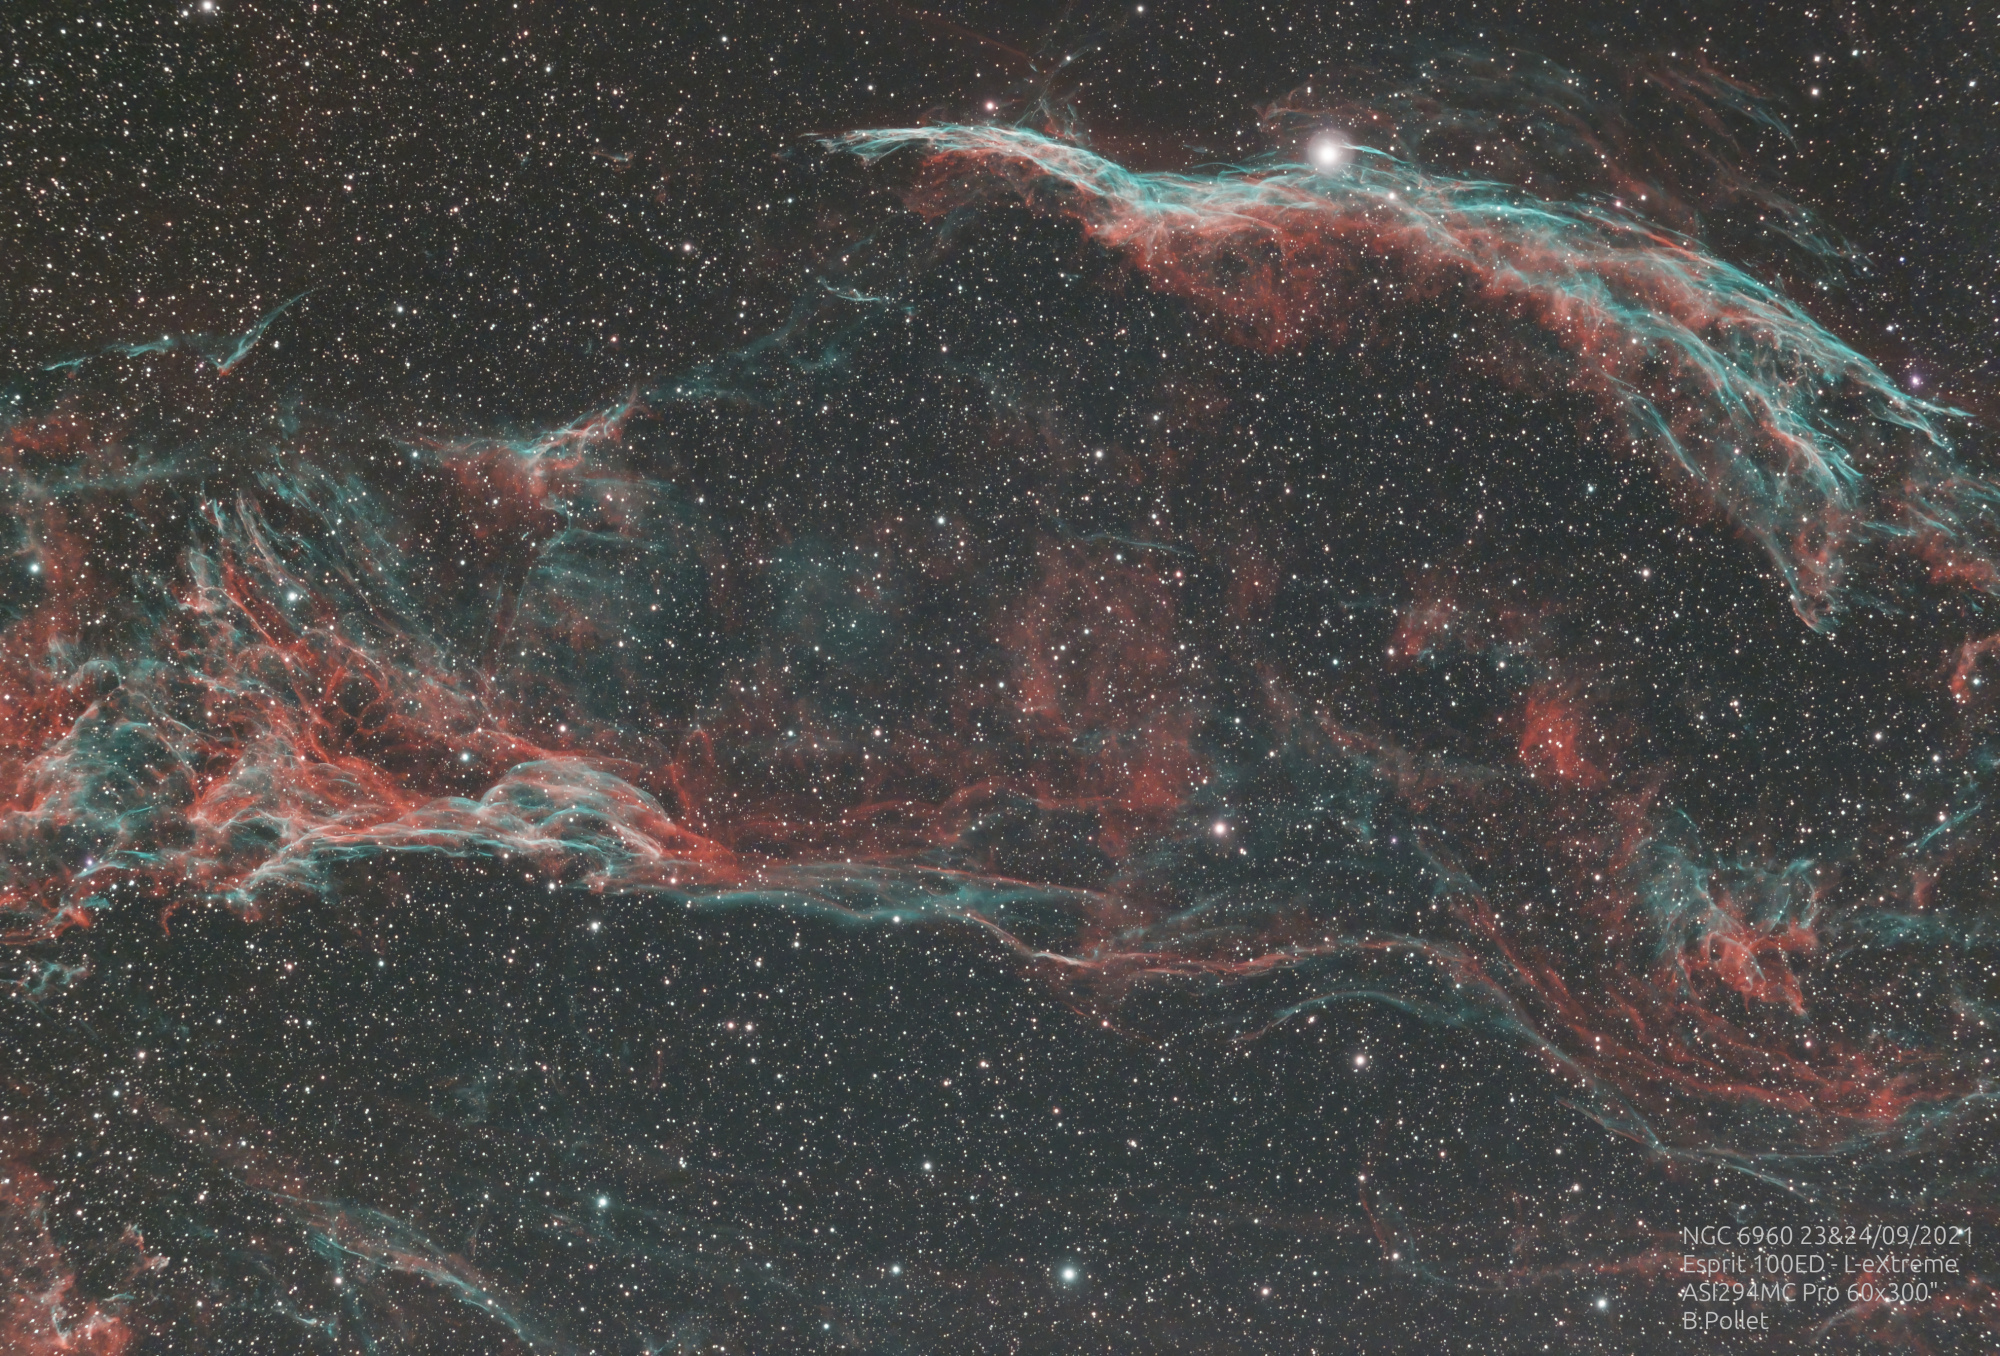 2021-09-23&24_NGC6960-texte.jpg